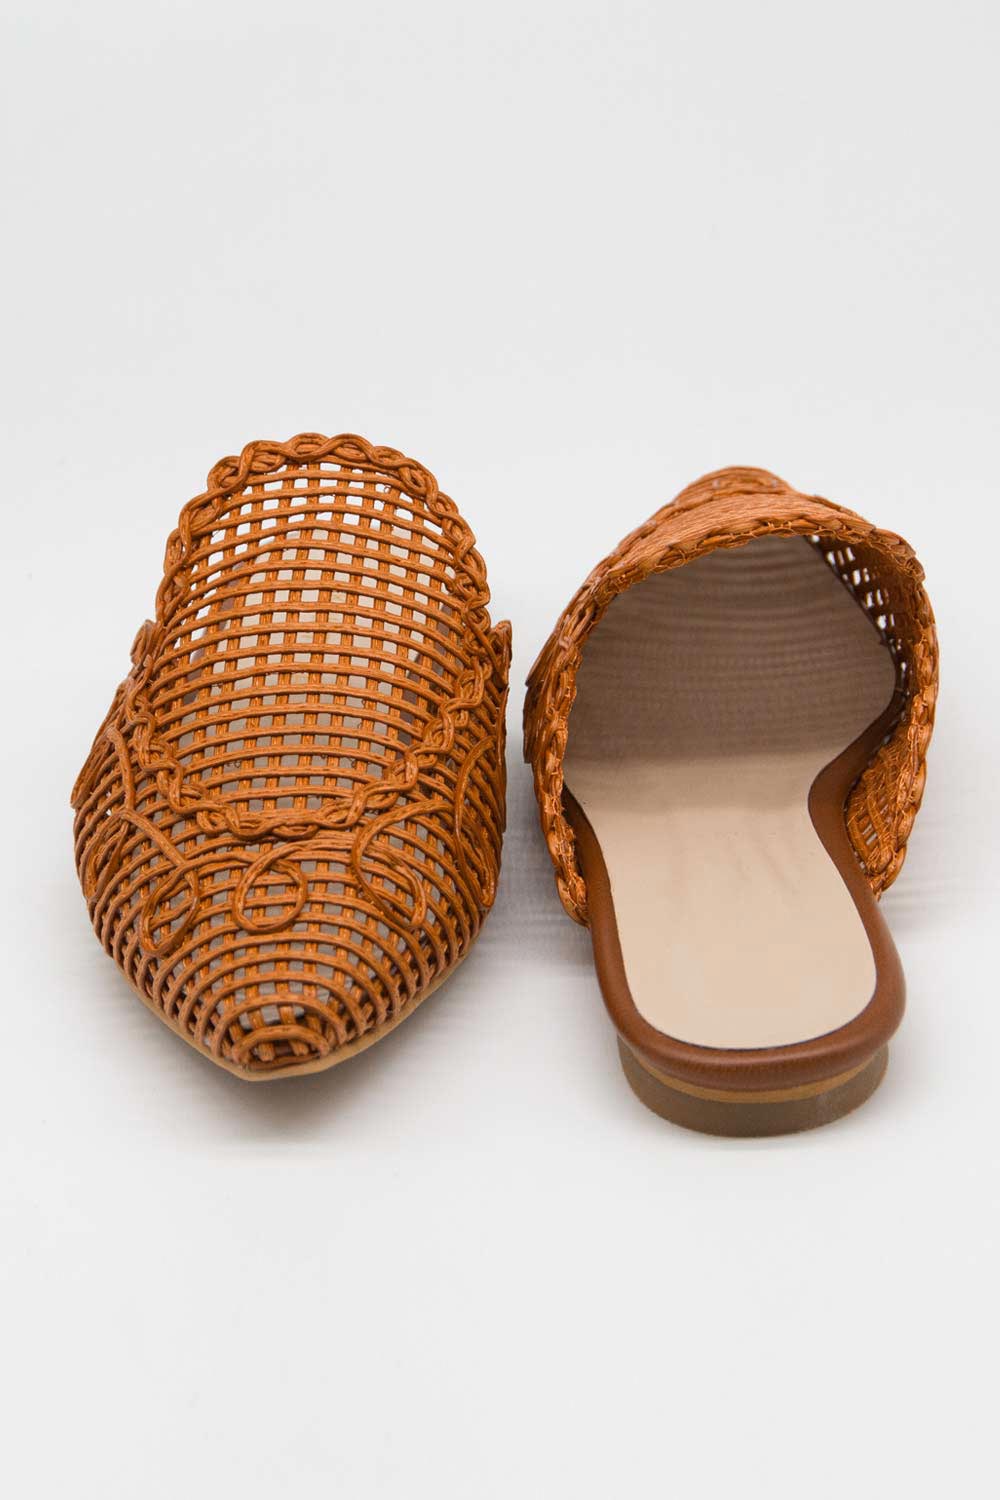 Knit Designed Mule Slippers (Camel)